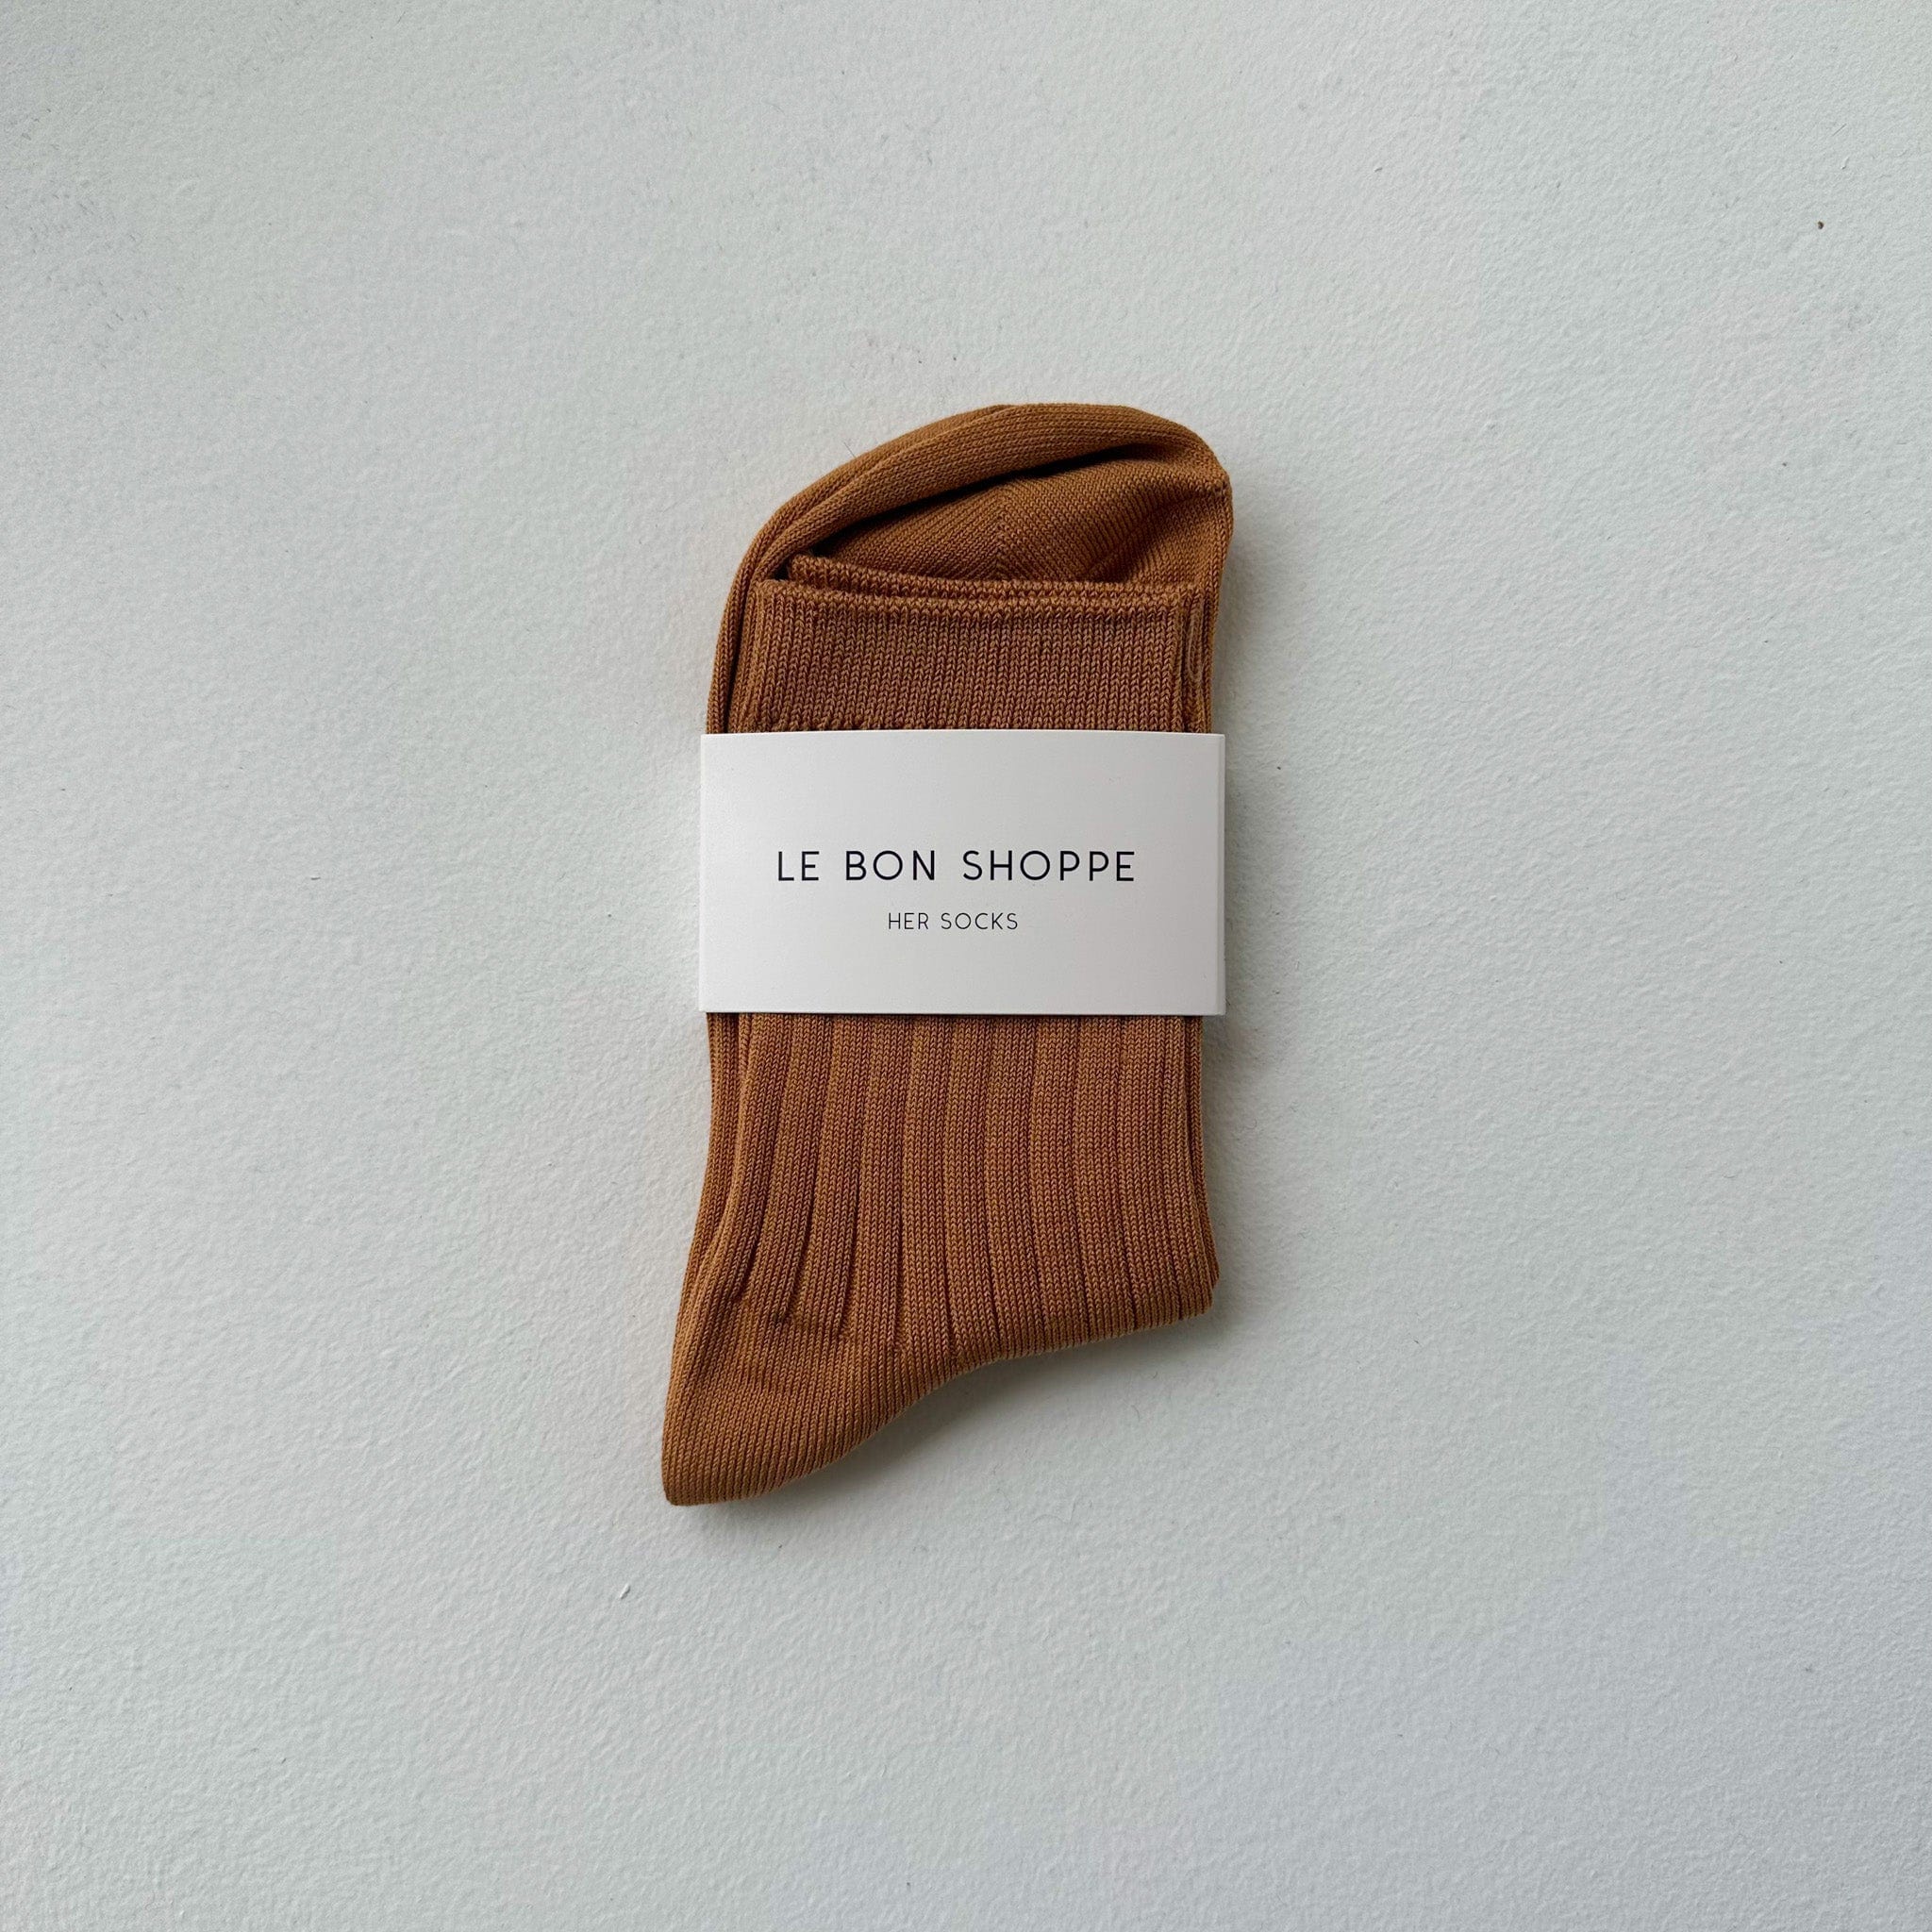 Le Bon Shoppe socks Peanut Butter Le Bon "Her" Socks